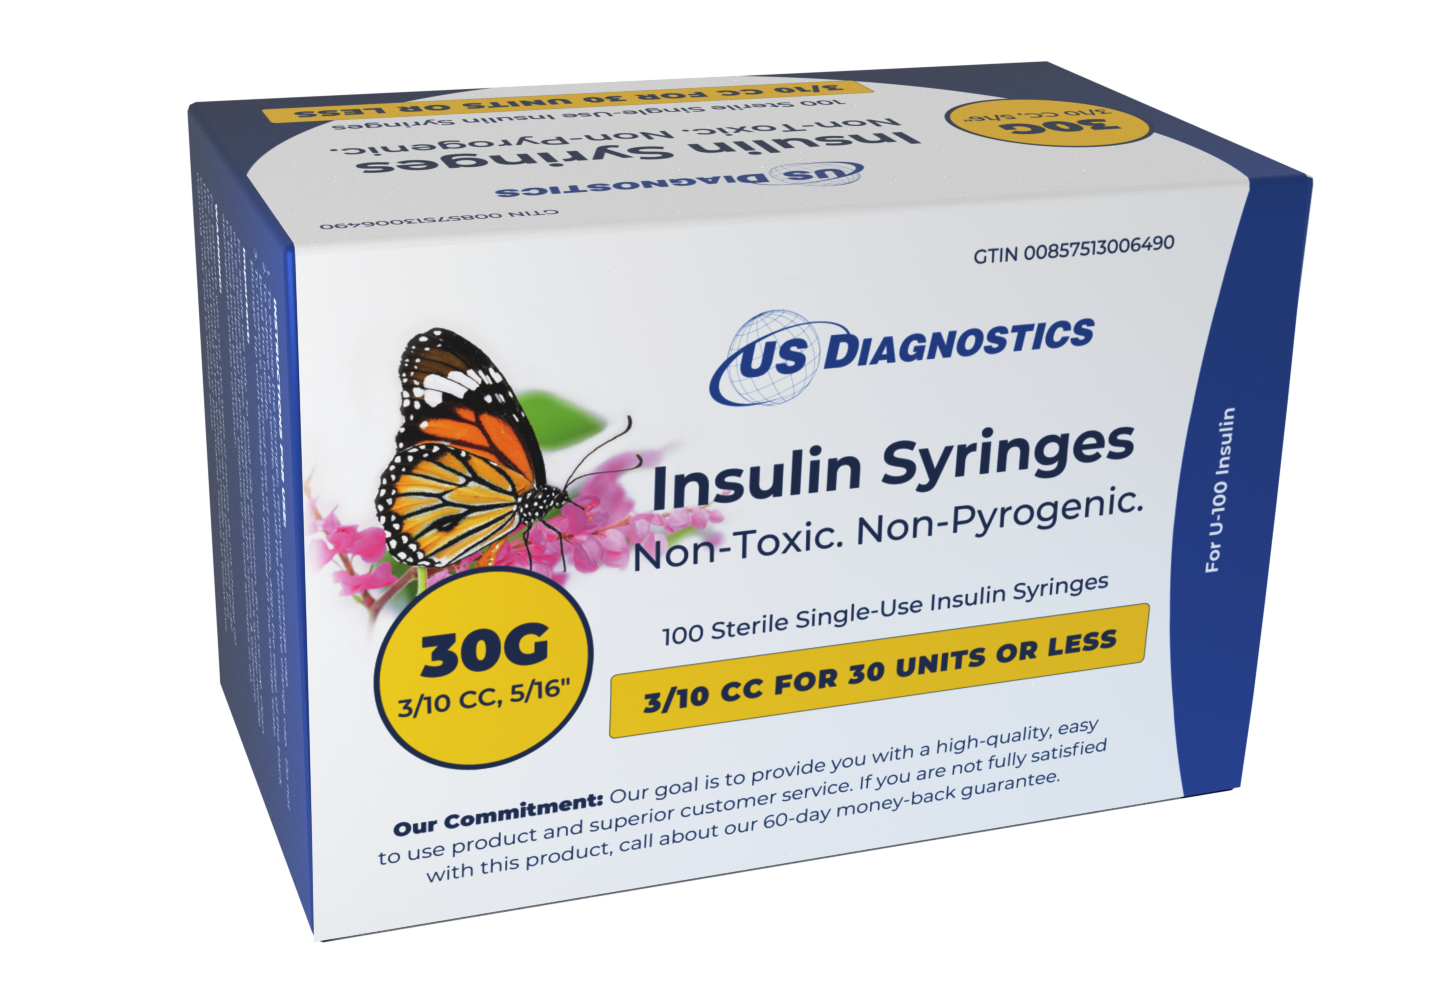 Insulin Syringes 30G, 3/10cc, 5/16", 100/box